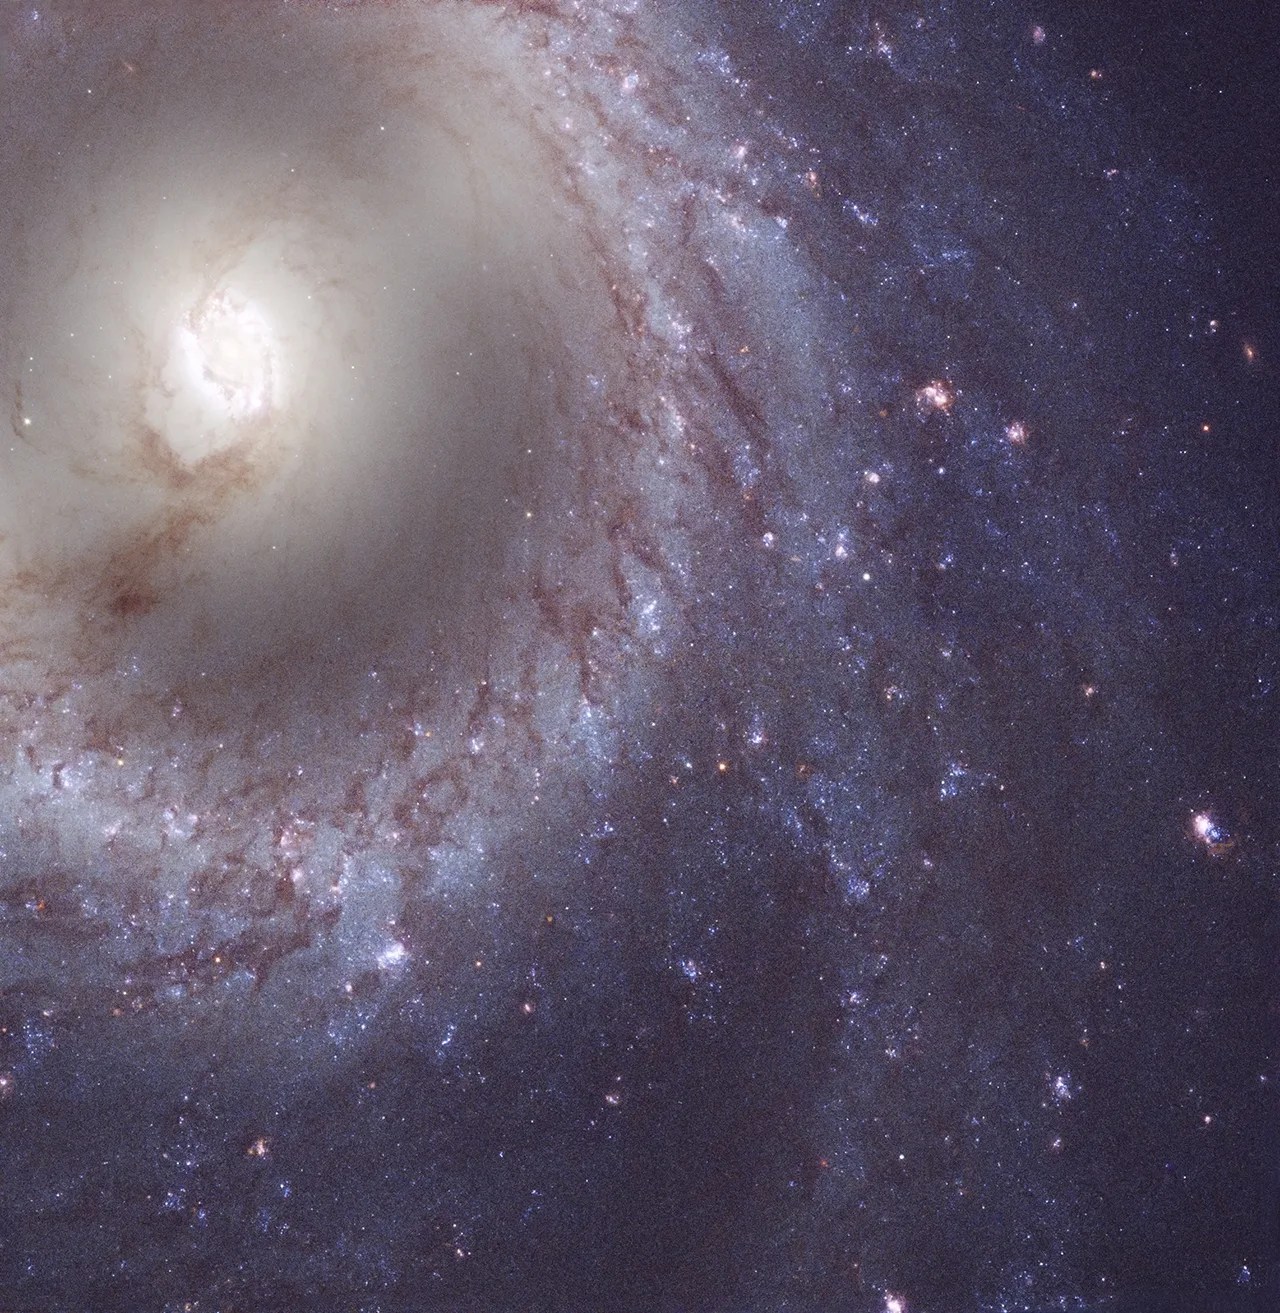 Hubble image of M95